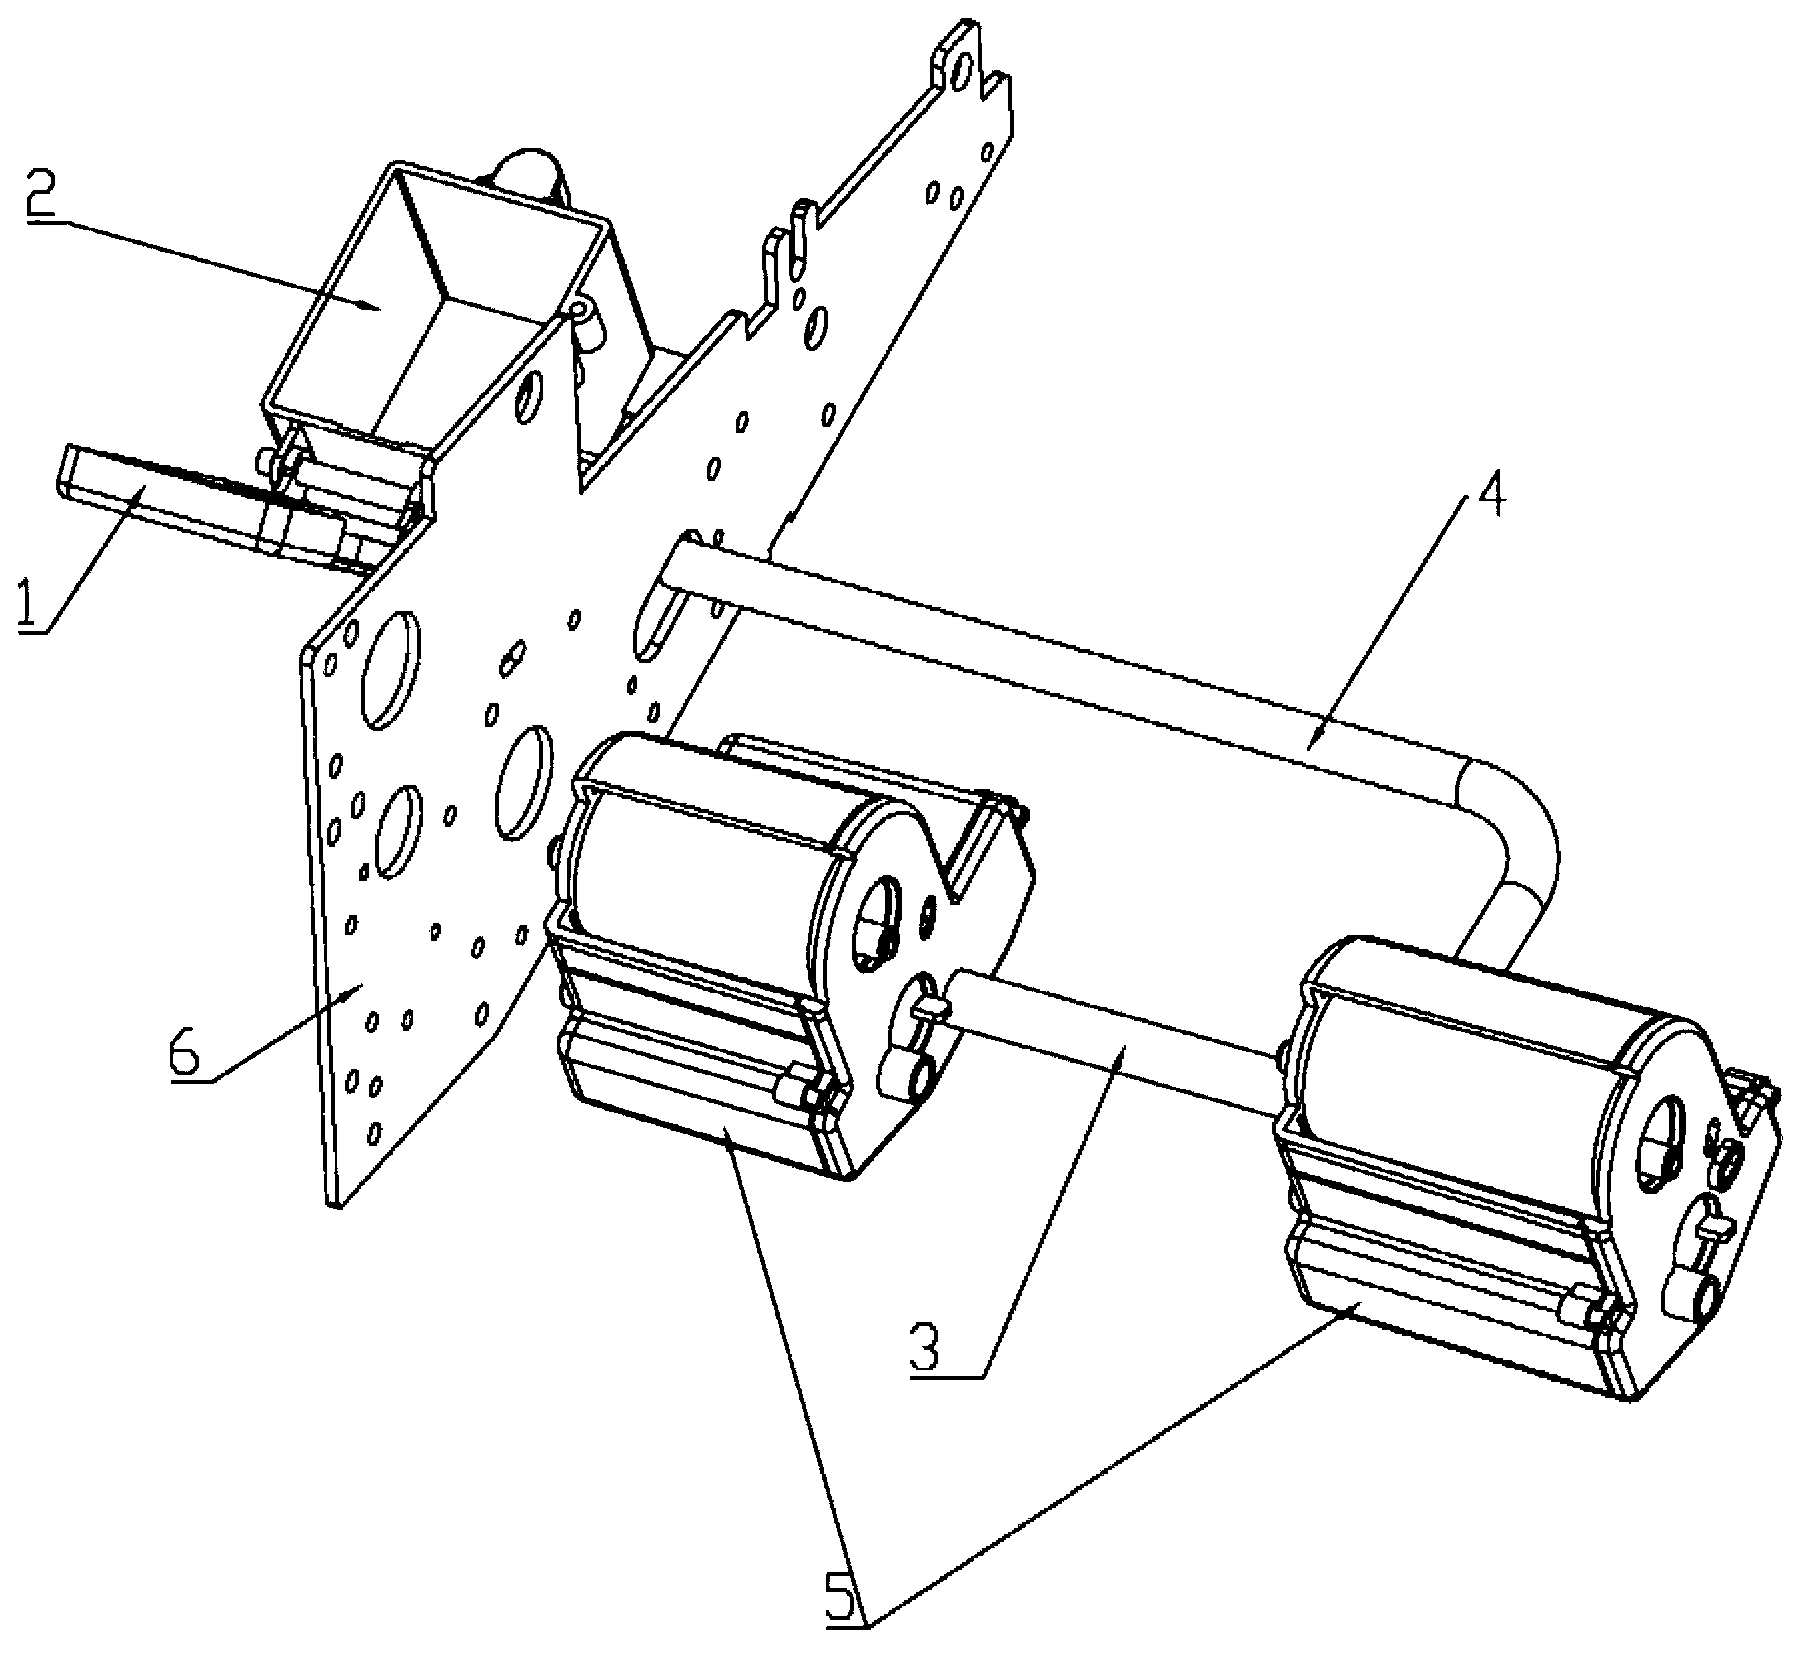 Handy stamp-pad ink feeder of stamping machine